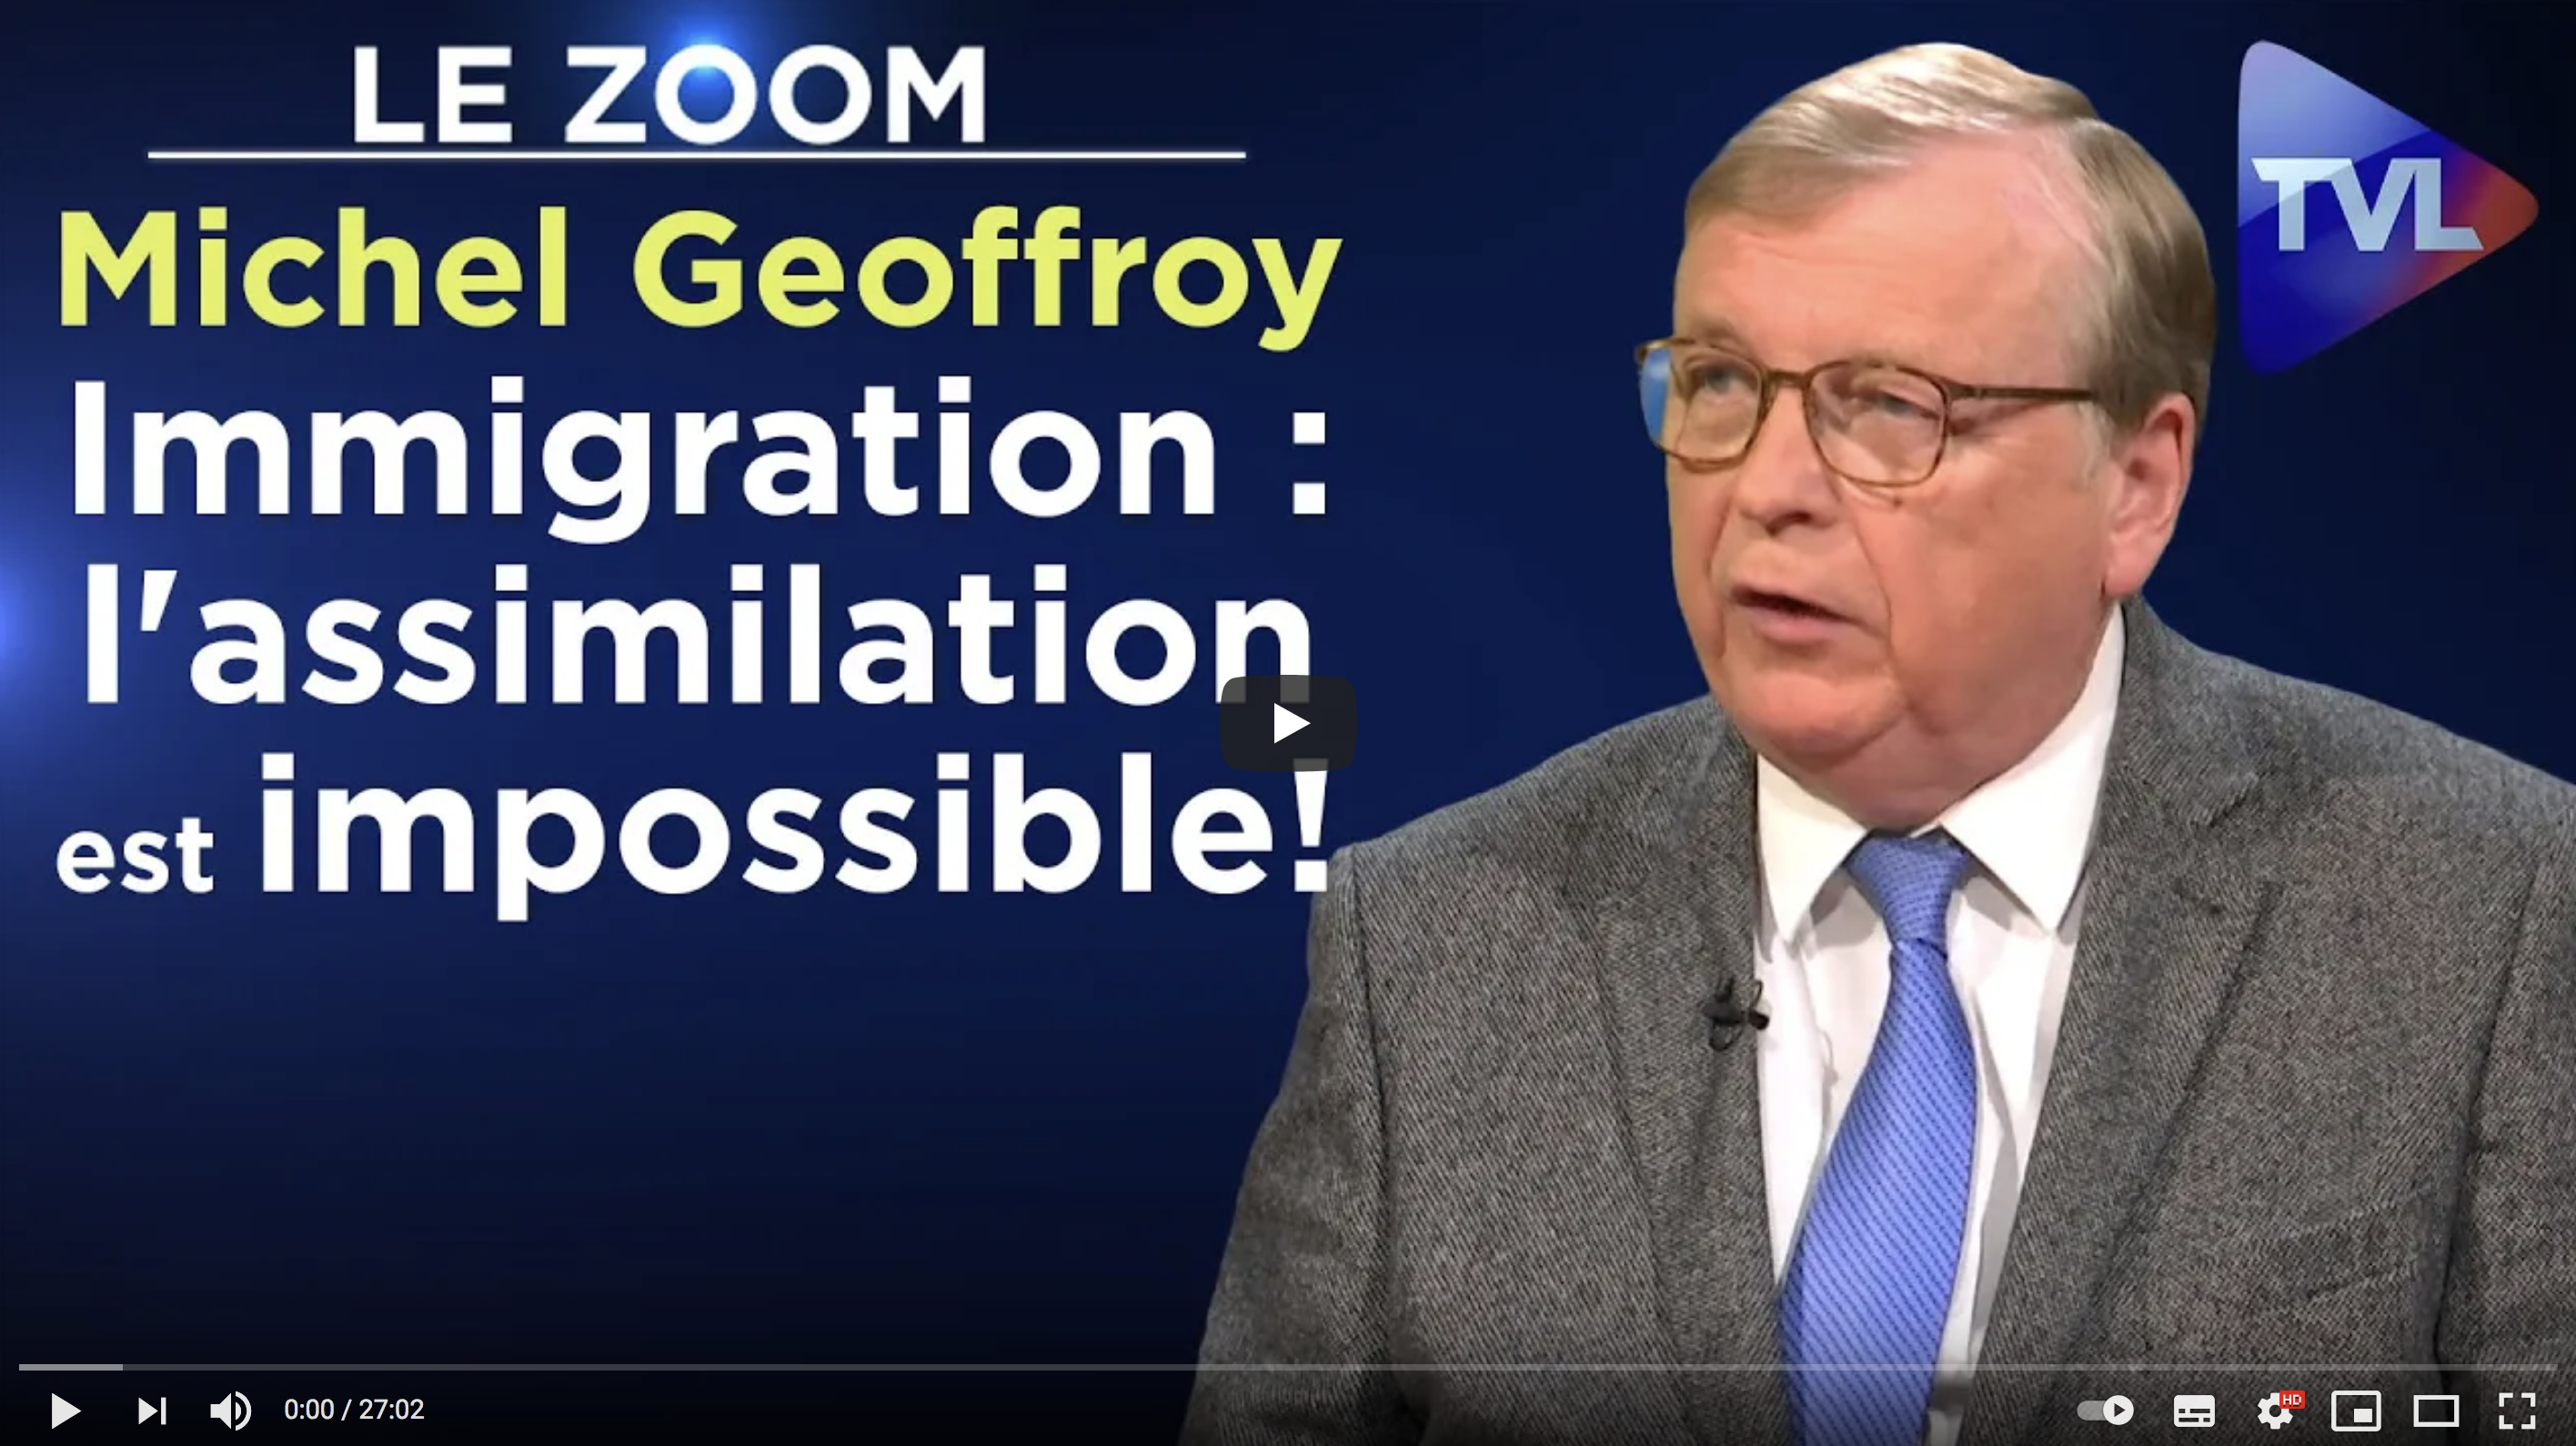 Immigration : “L’assimilation est impossible !” (Michel Geoffroy)